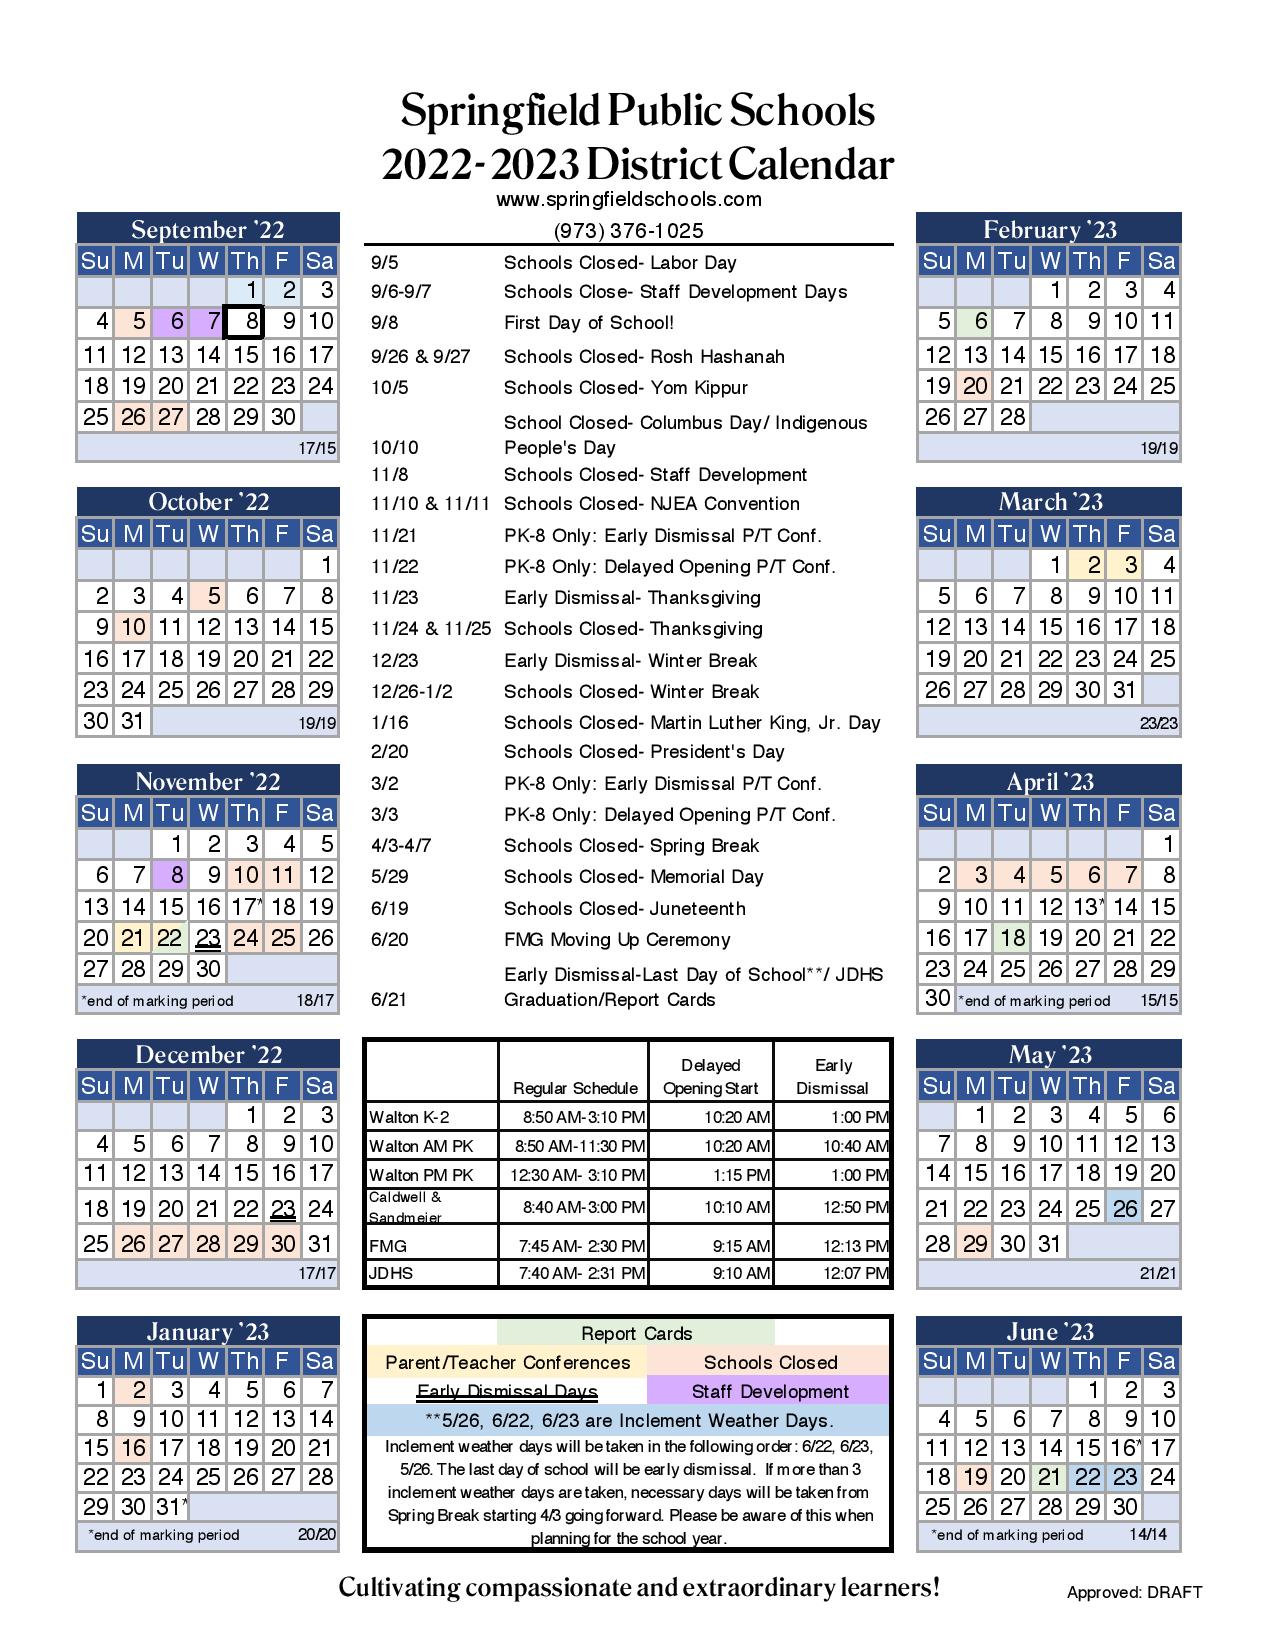 Springfield Public Schools Calendar Holidays 2023-2024